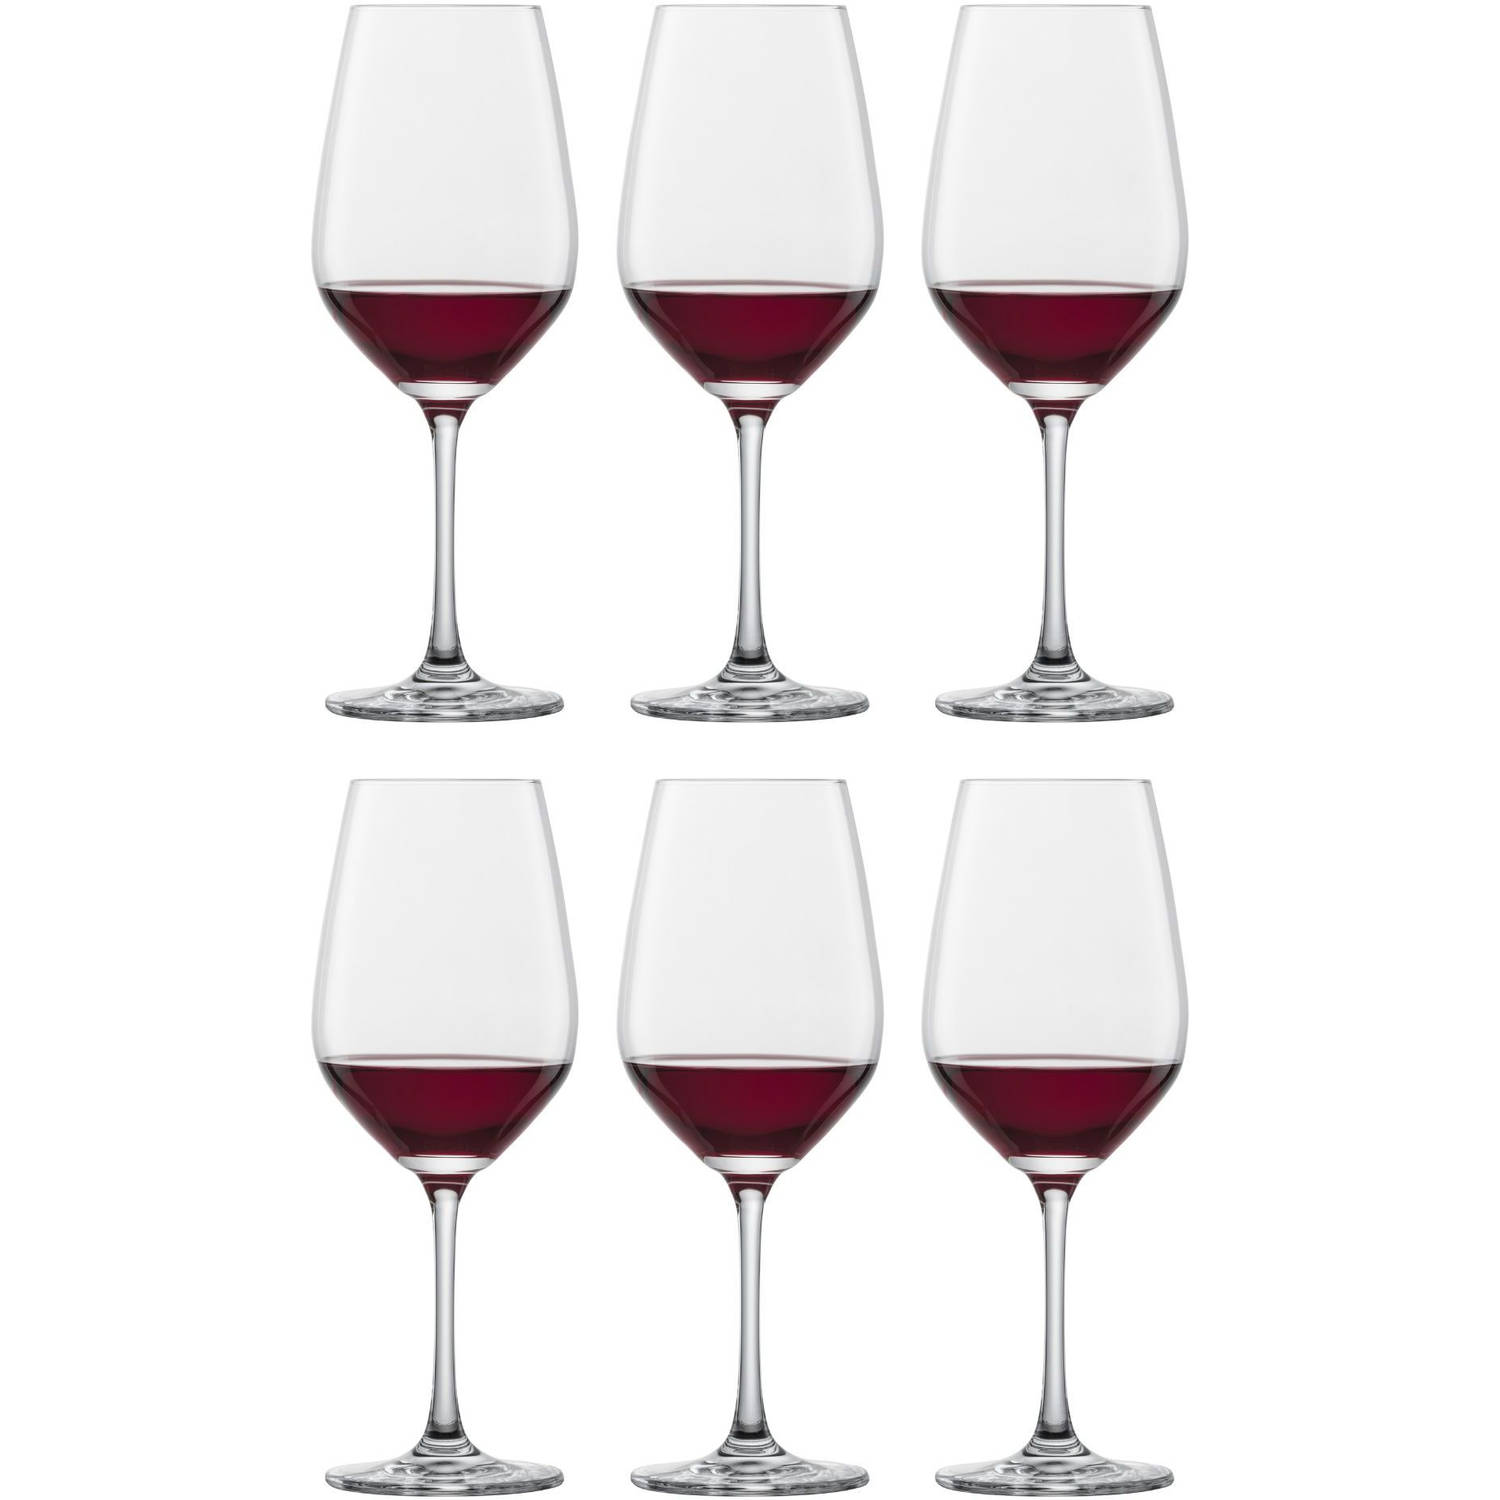 Schott Zwiesel Vina, Bourgogne glas, 404ml (no. 0)